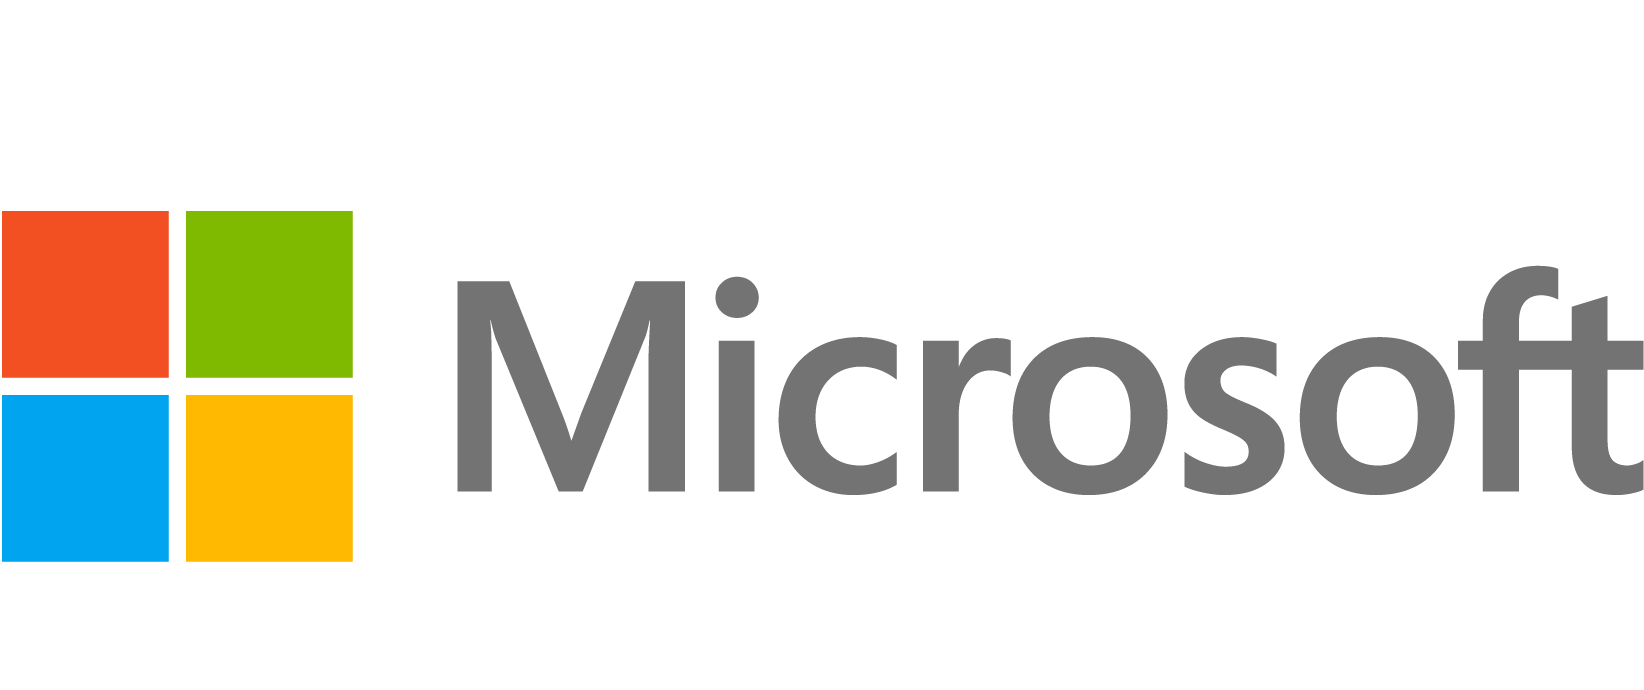 Microsoft 365 Apps for Business - Abonnement-Lizenz (1 Jahr) - Download - ESD - Pilot - Win, Mac, Android, iOS - All Languages - Eurozone von Microsoft